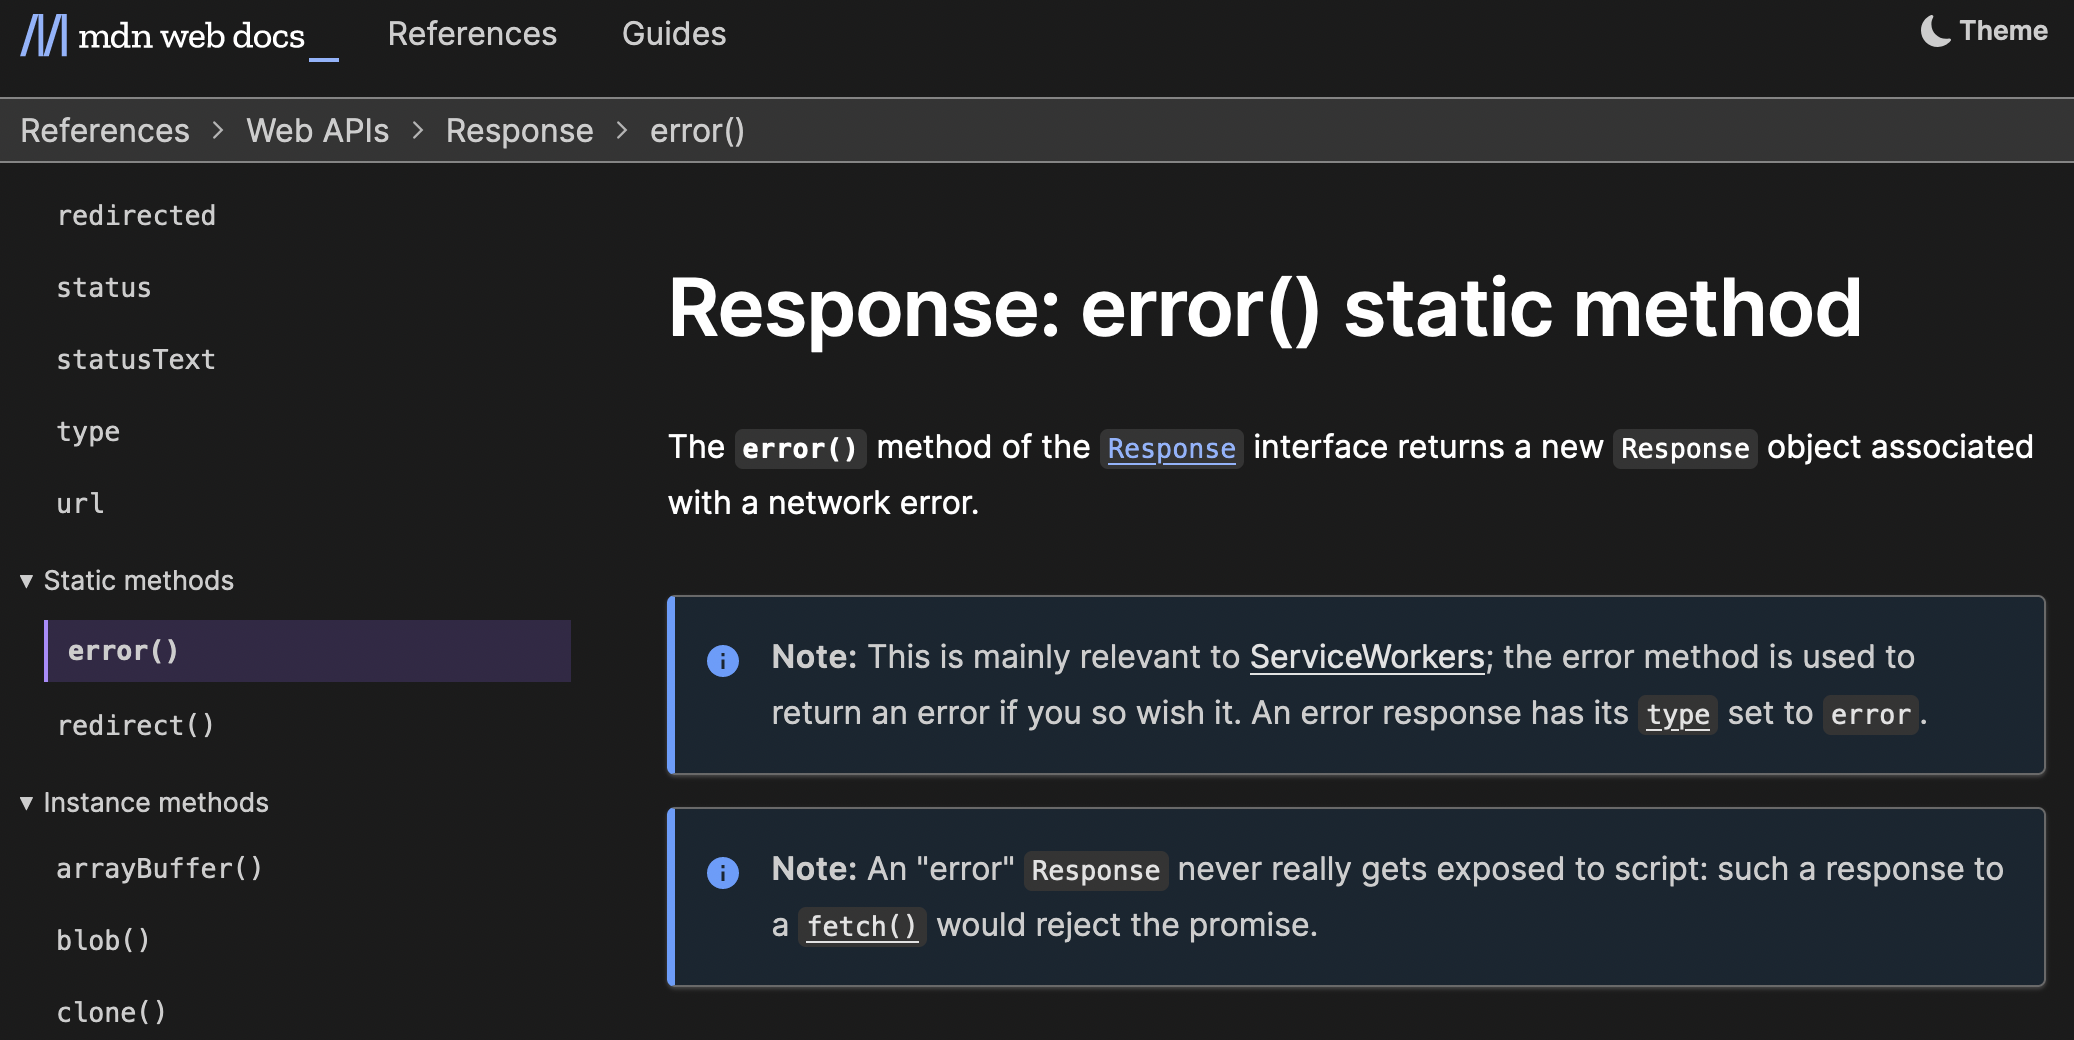 screenshot of new title for Response's static error() method, which reads 'Response: error() static method'